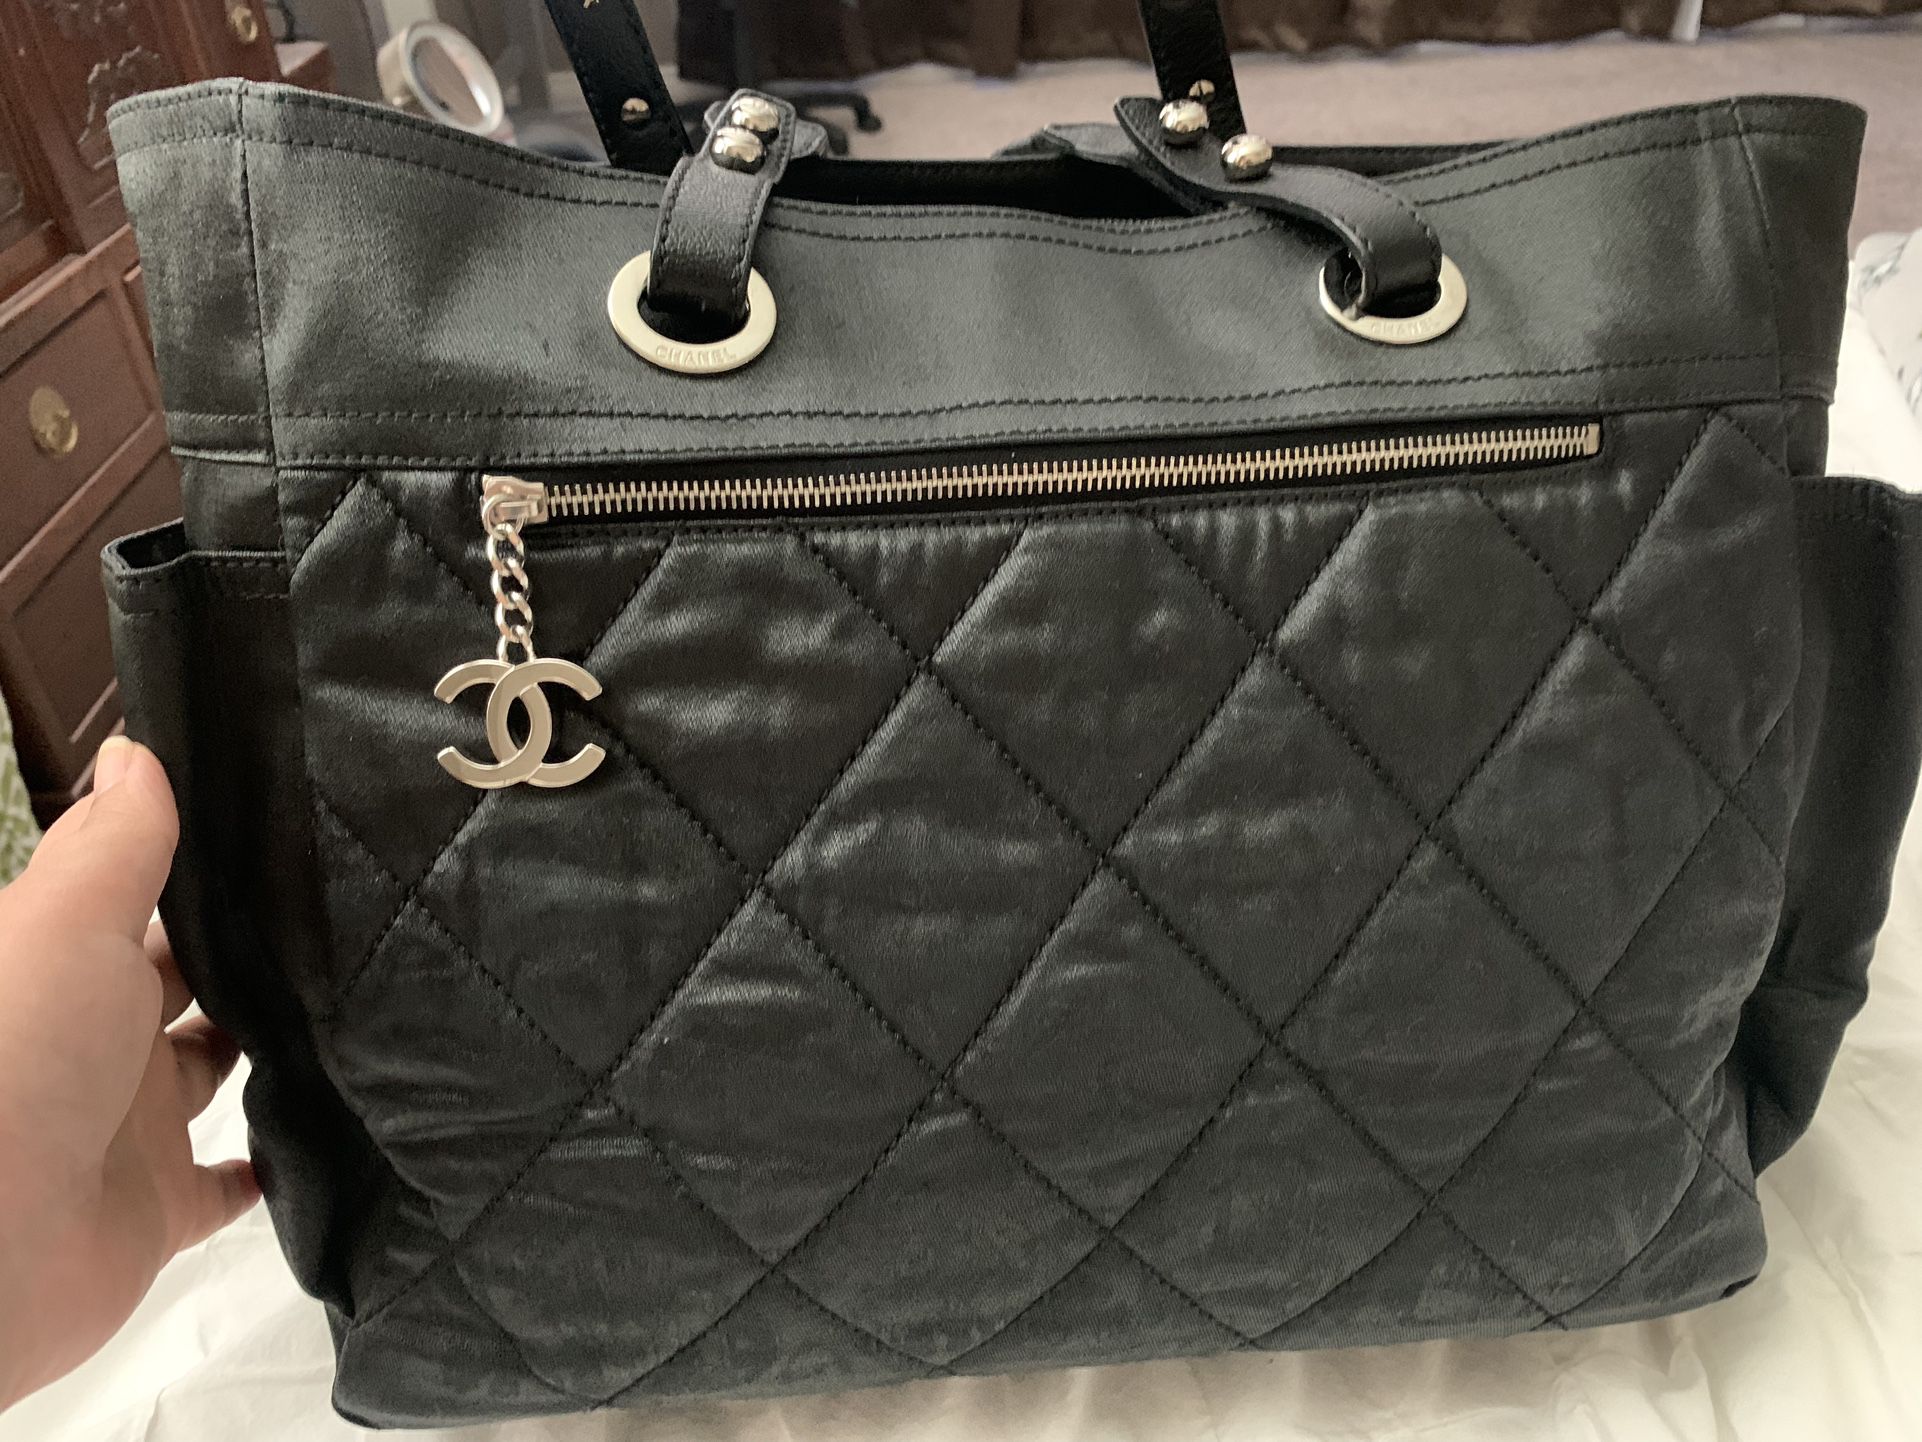 Authentic Chanel bag 